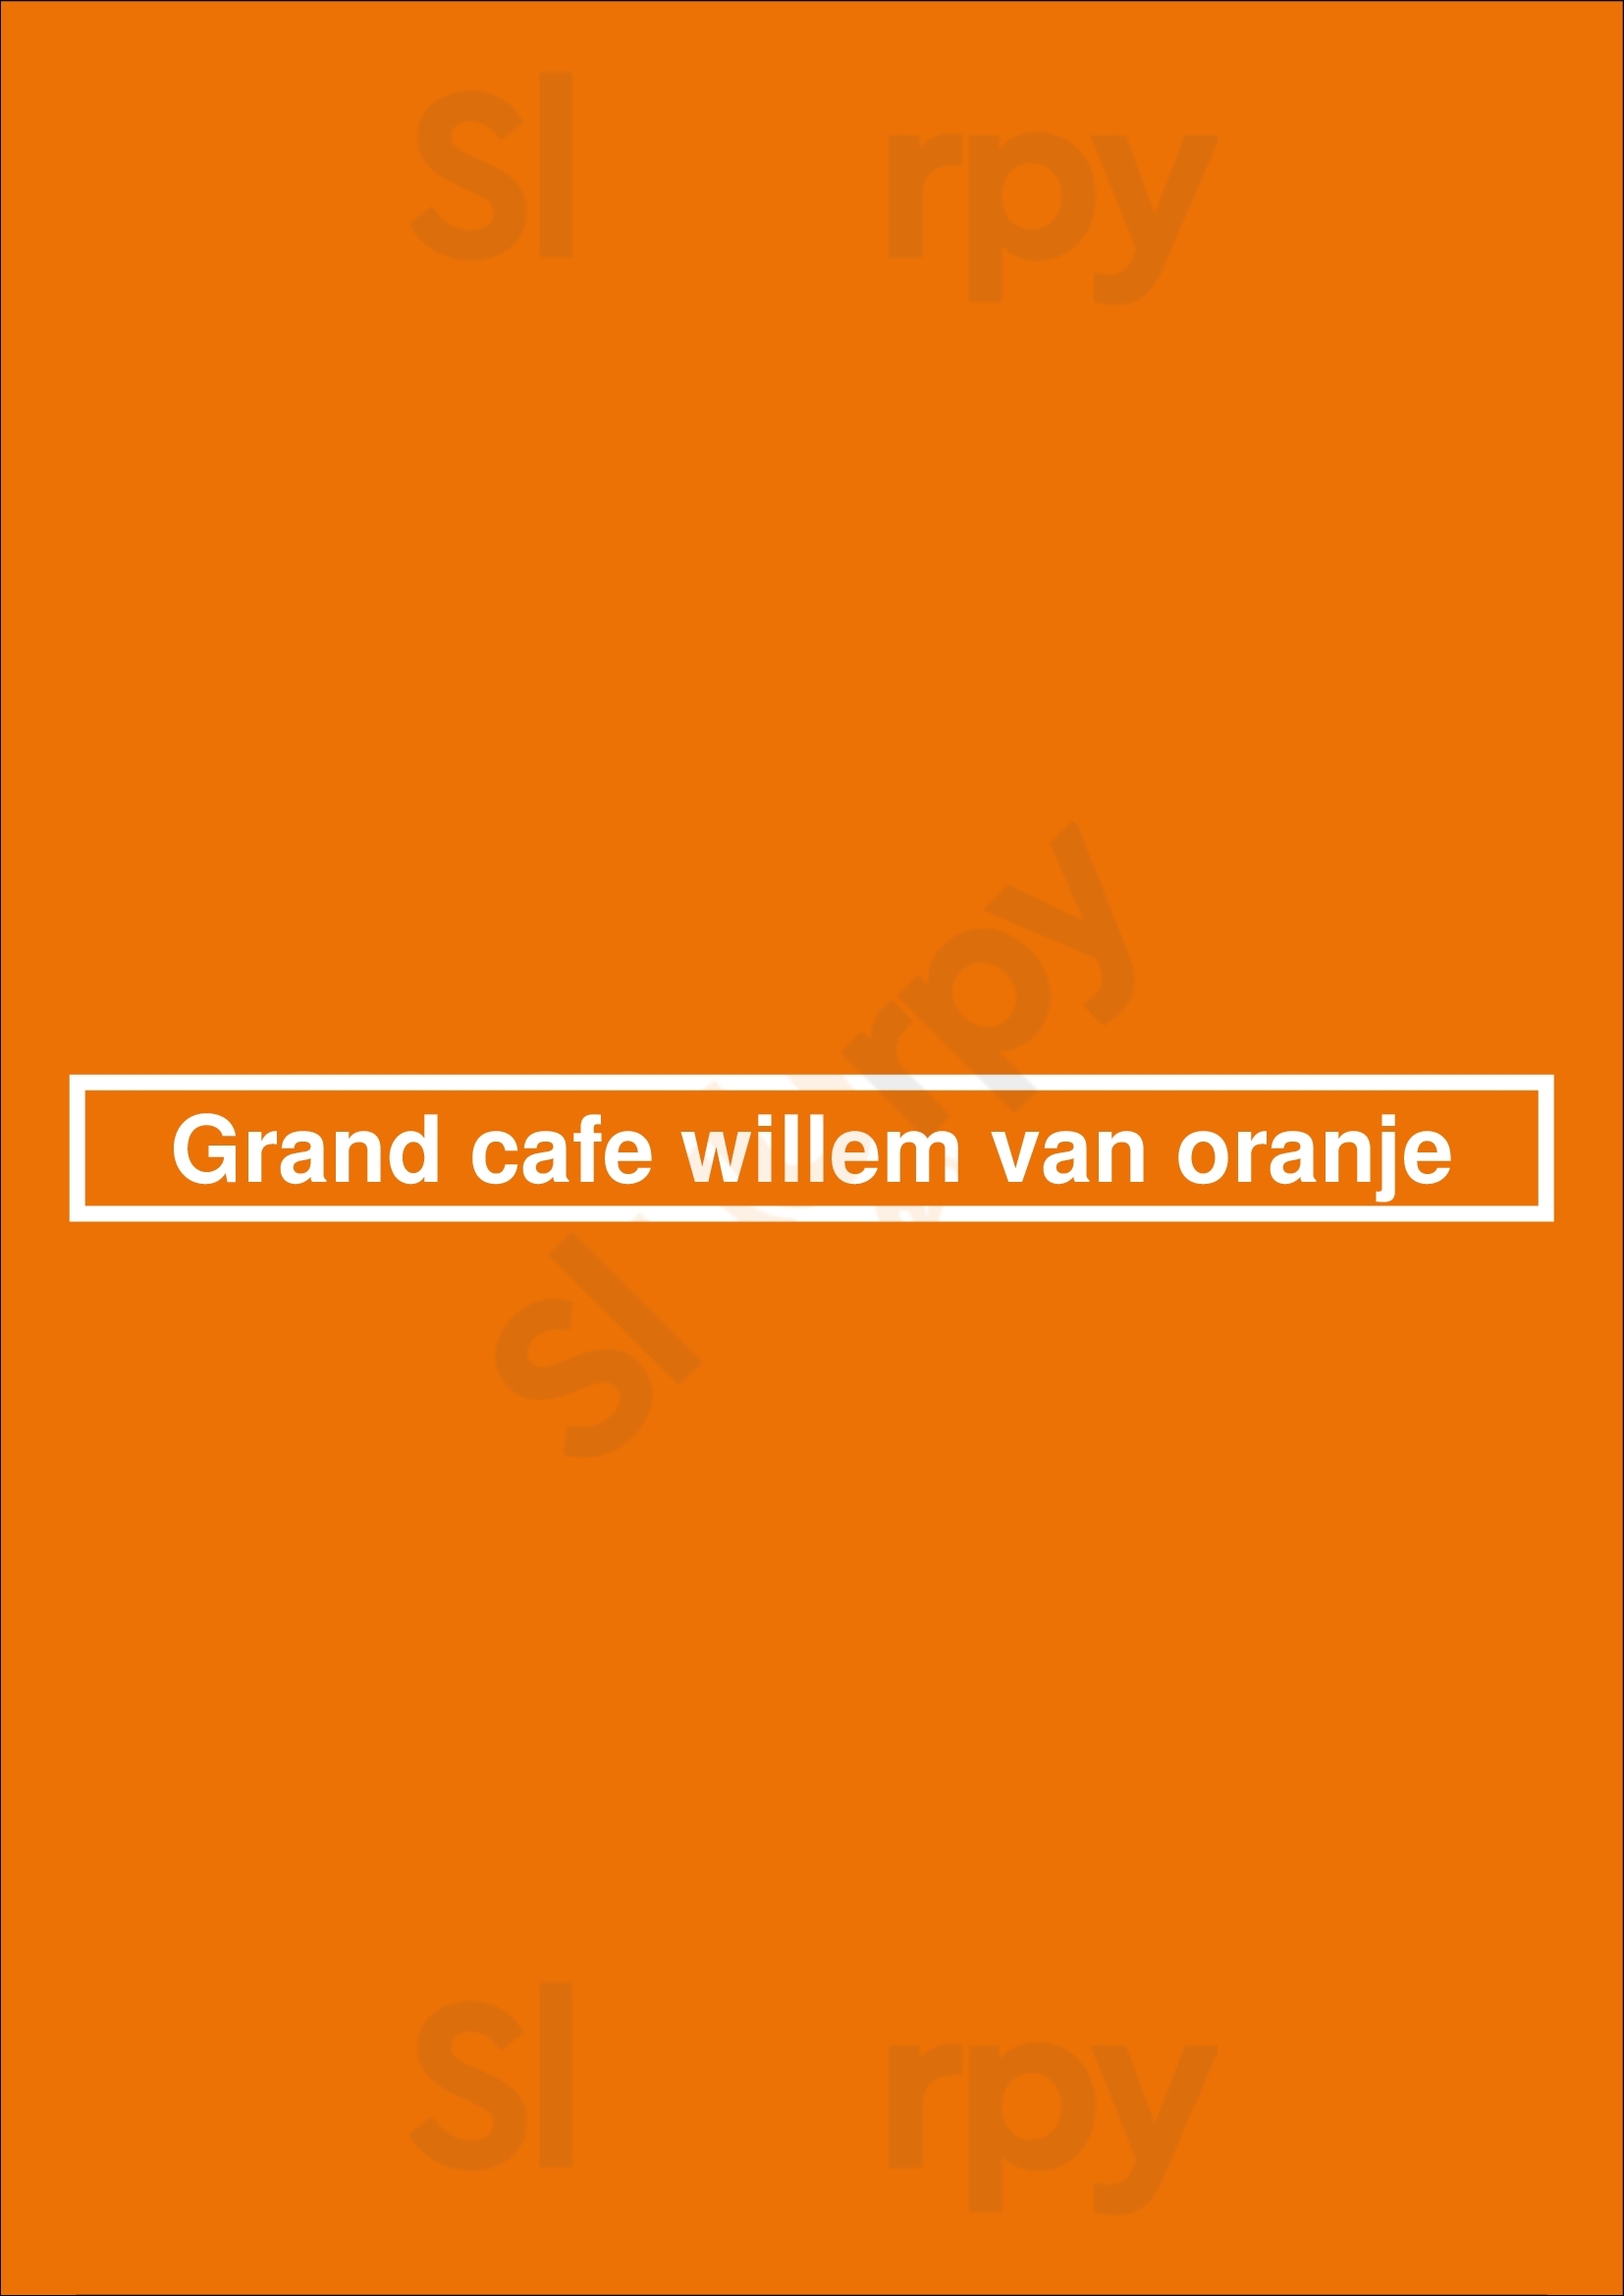 Grand Cafe Willem Van Oranje Delft Menu - 1